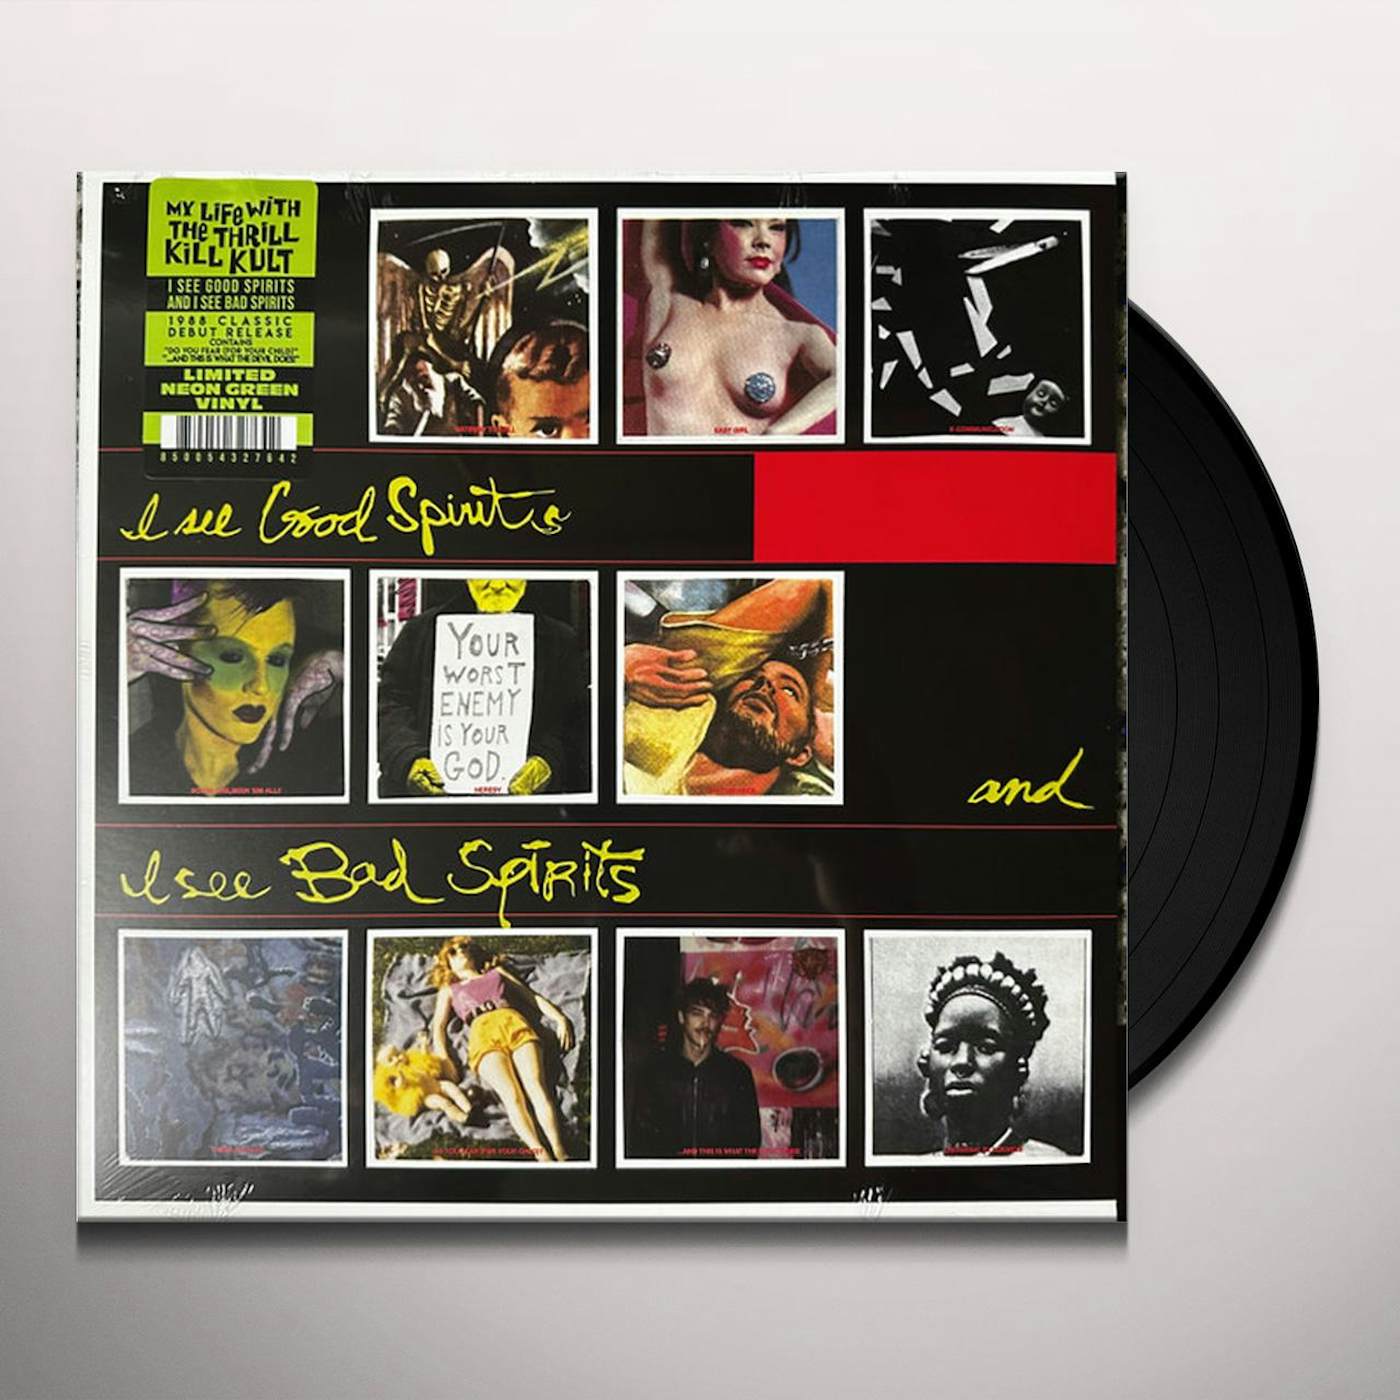 My Life With The Thrill Kill Kult I SEE GOOD SPIRITS & I SEE BAD SPIRITS Vinyl Record